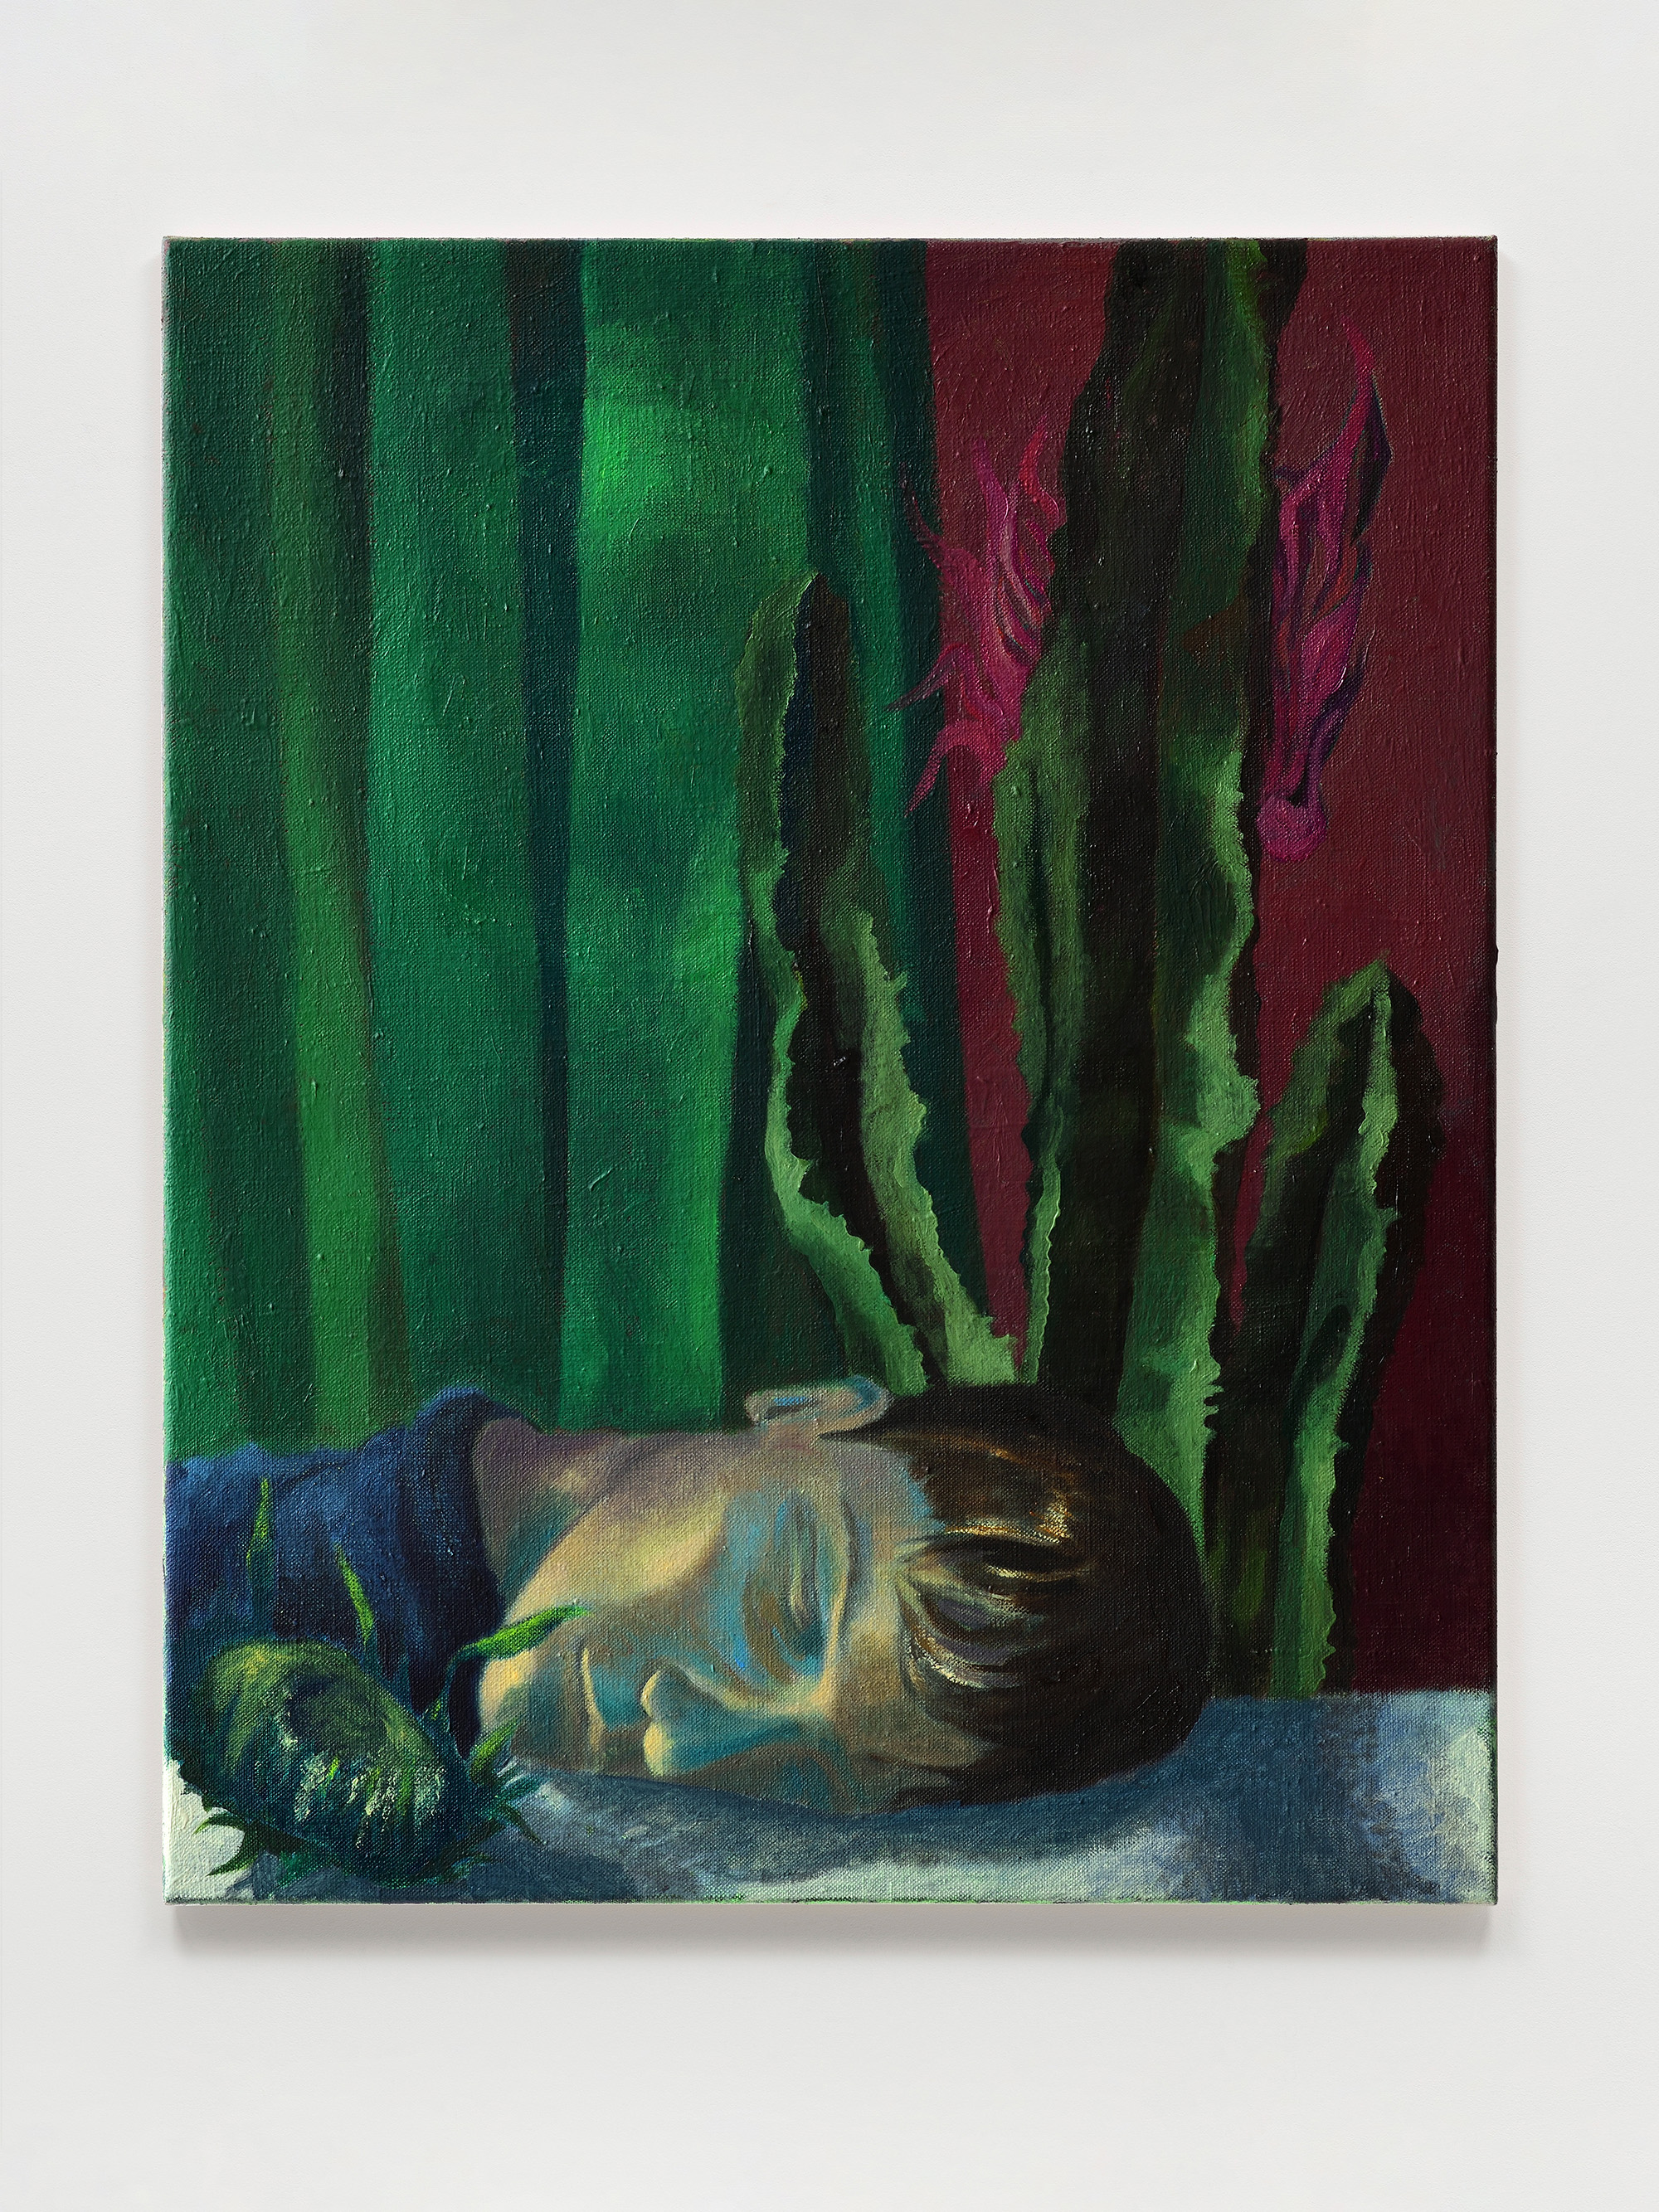 Alessandro Fogo, Sleeper, 2023
Oil on linen, 50 x 40 cm, 19 3/4 x 15 3/4 in.